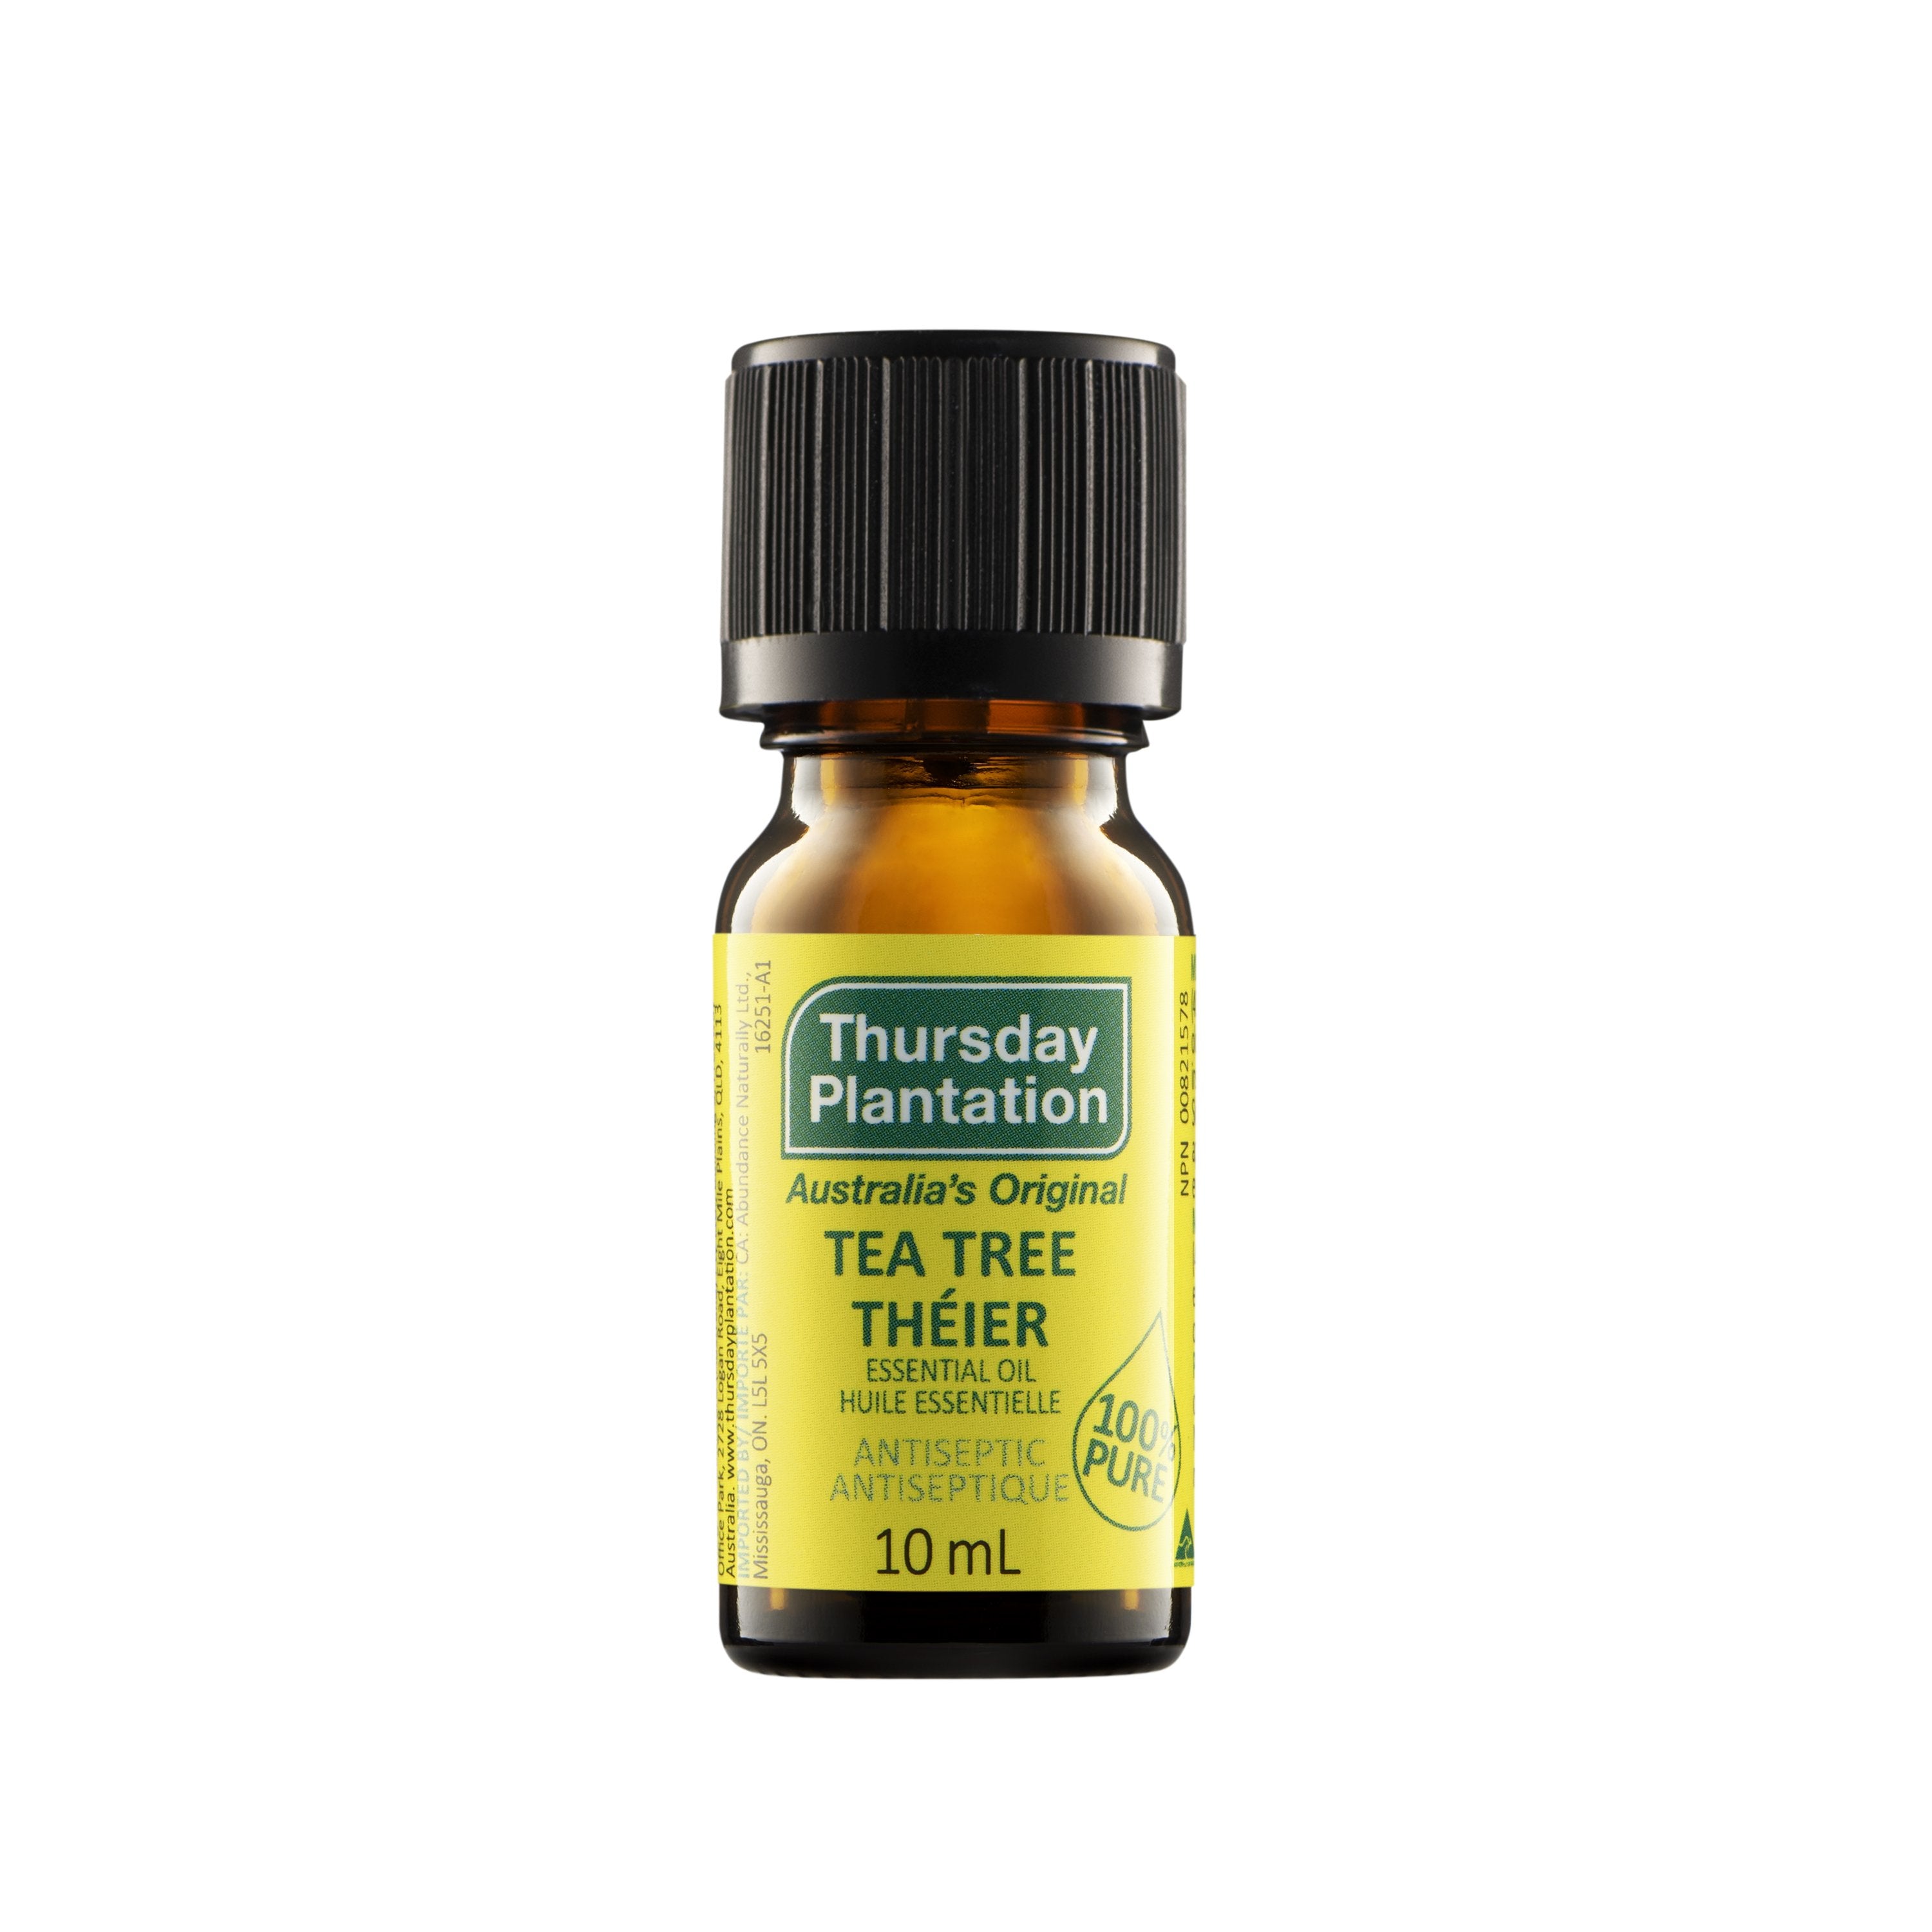 Thursday Plantation Tea Tree Oil 100% Pure - Antiseptic